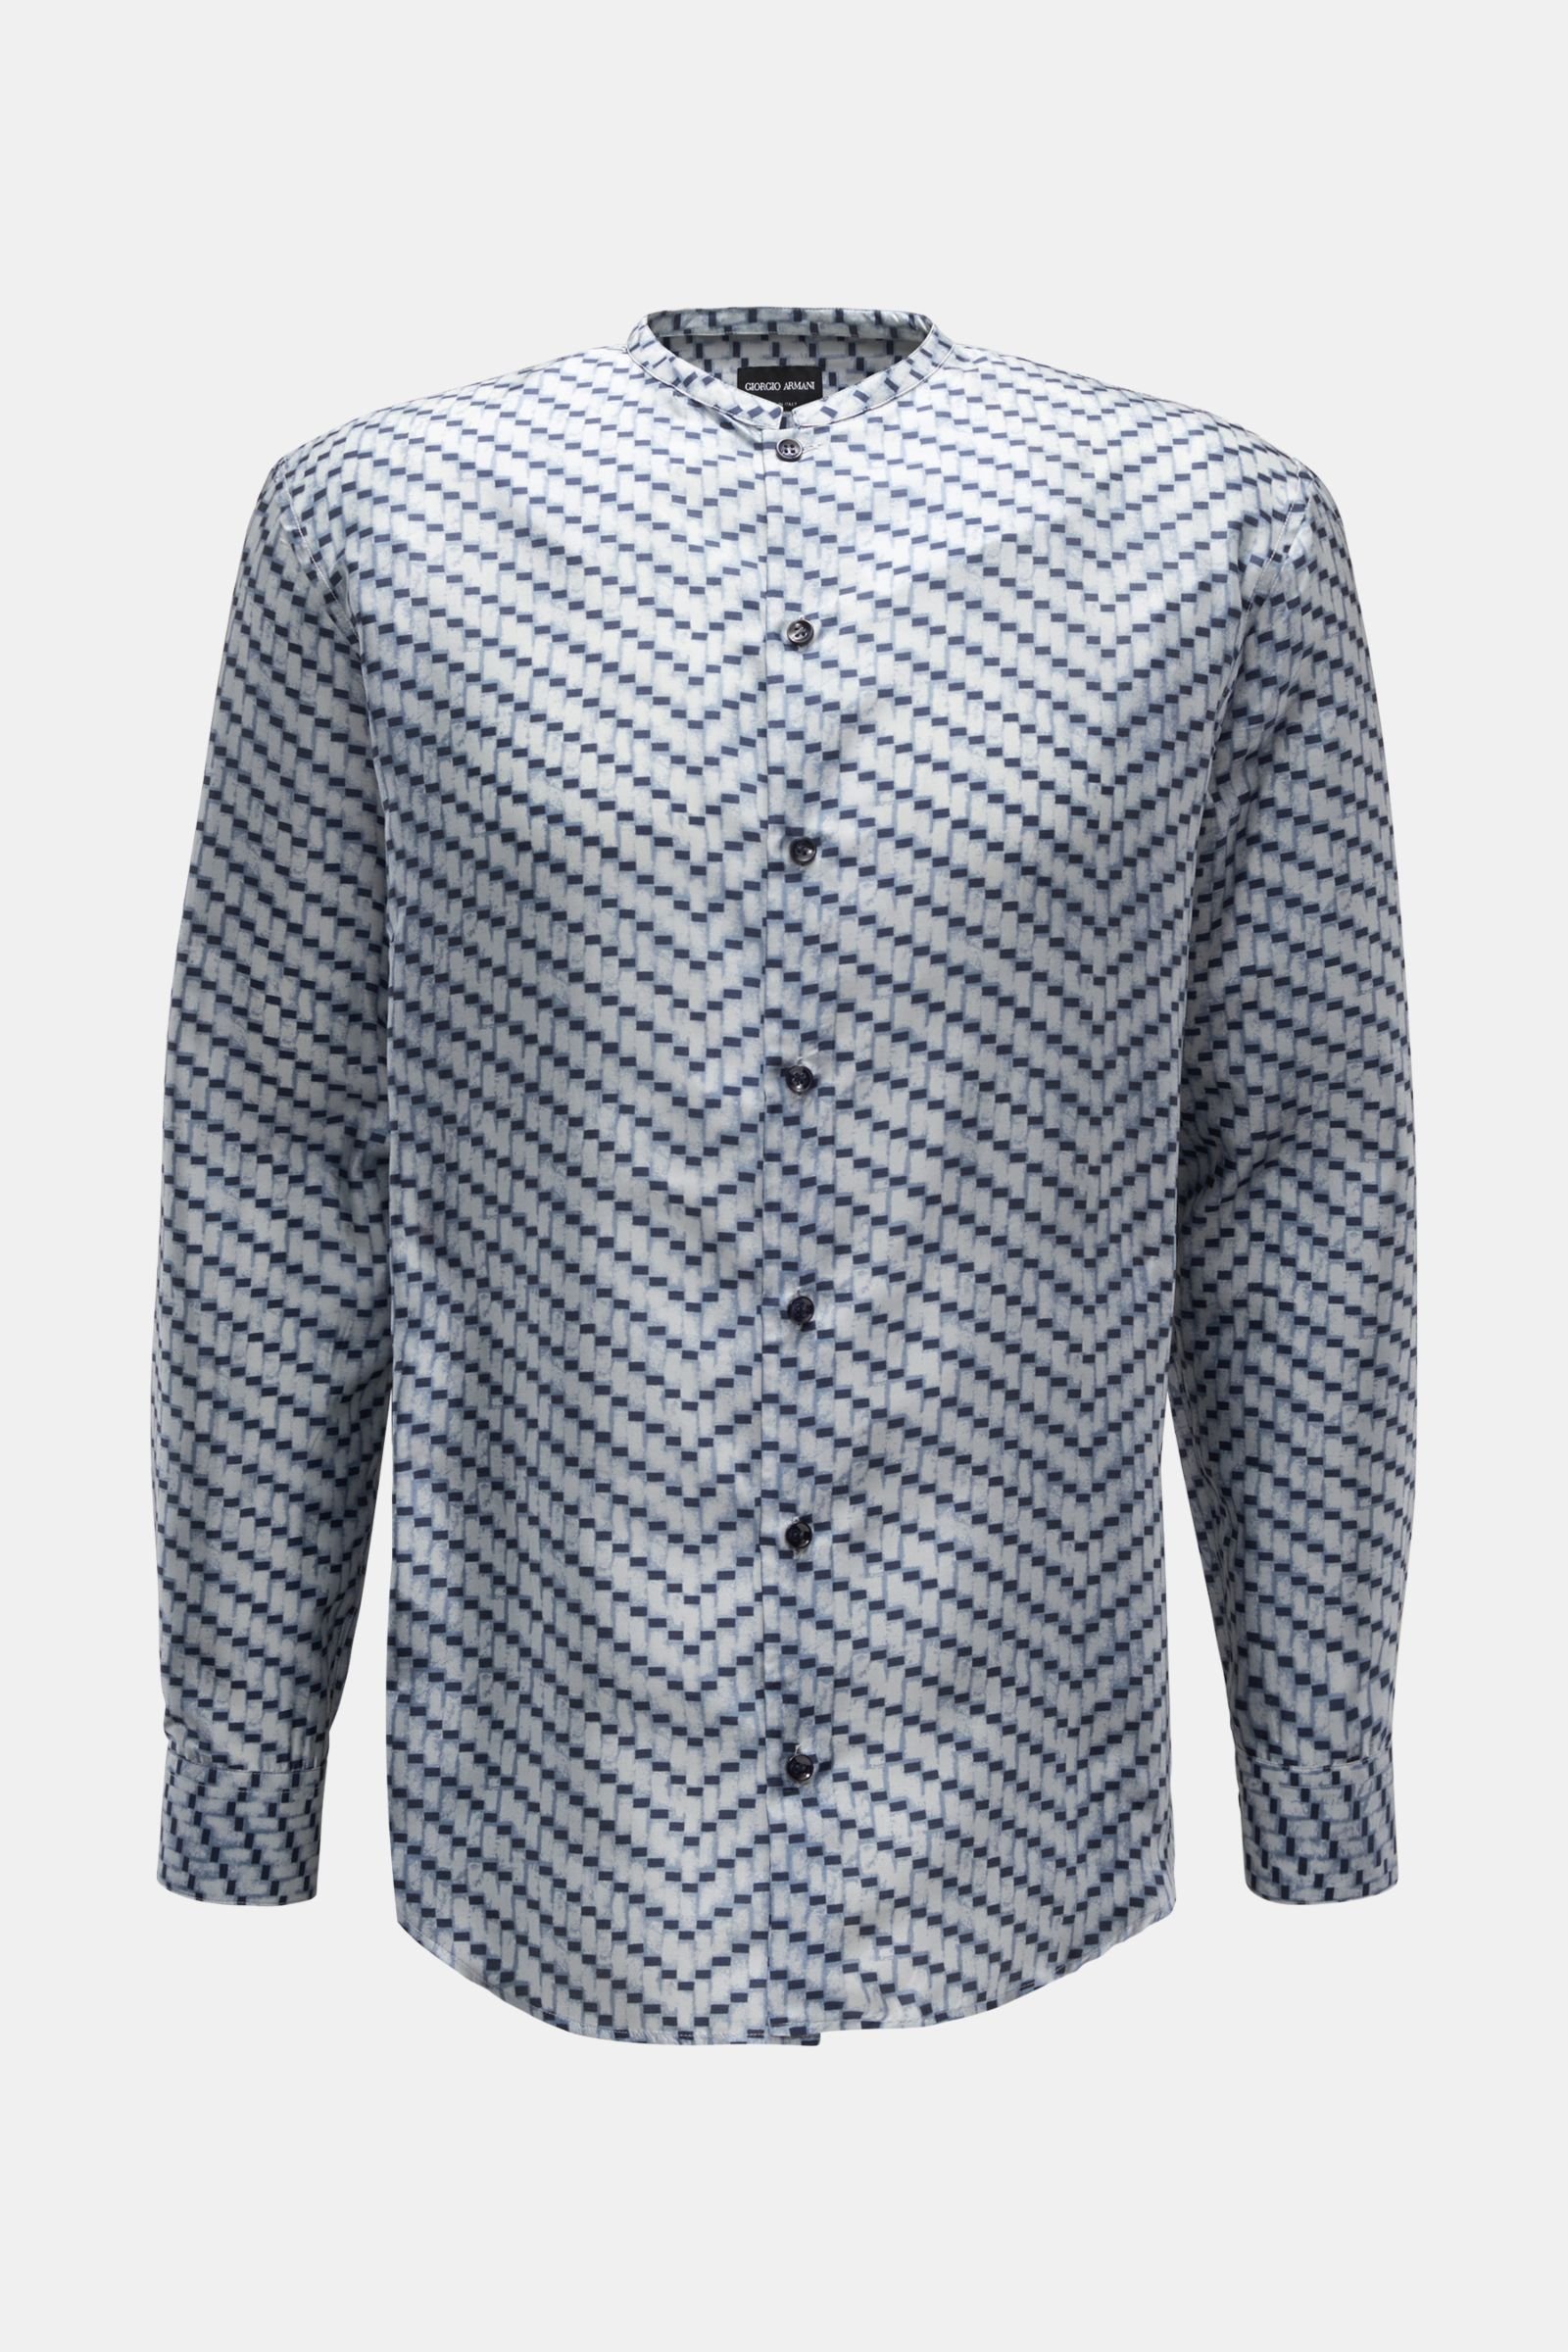 Silk shirt with grandad collar pastel blue/navy/grey-blue patterned